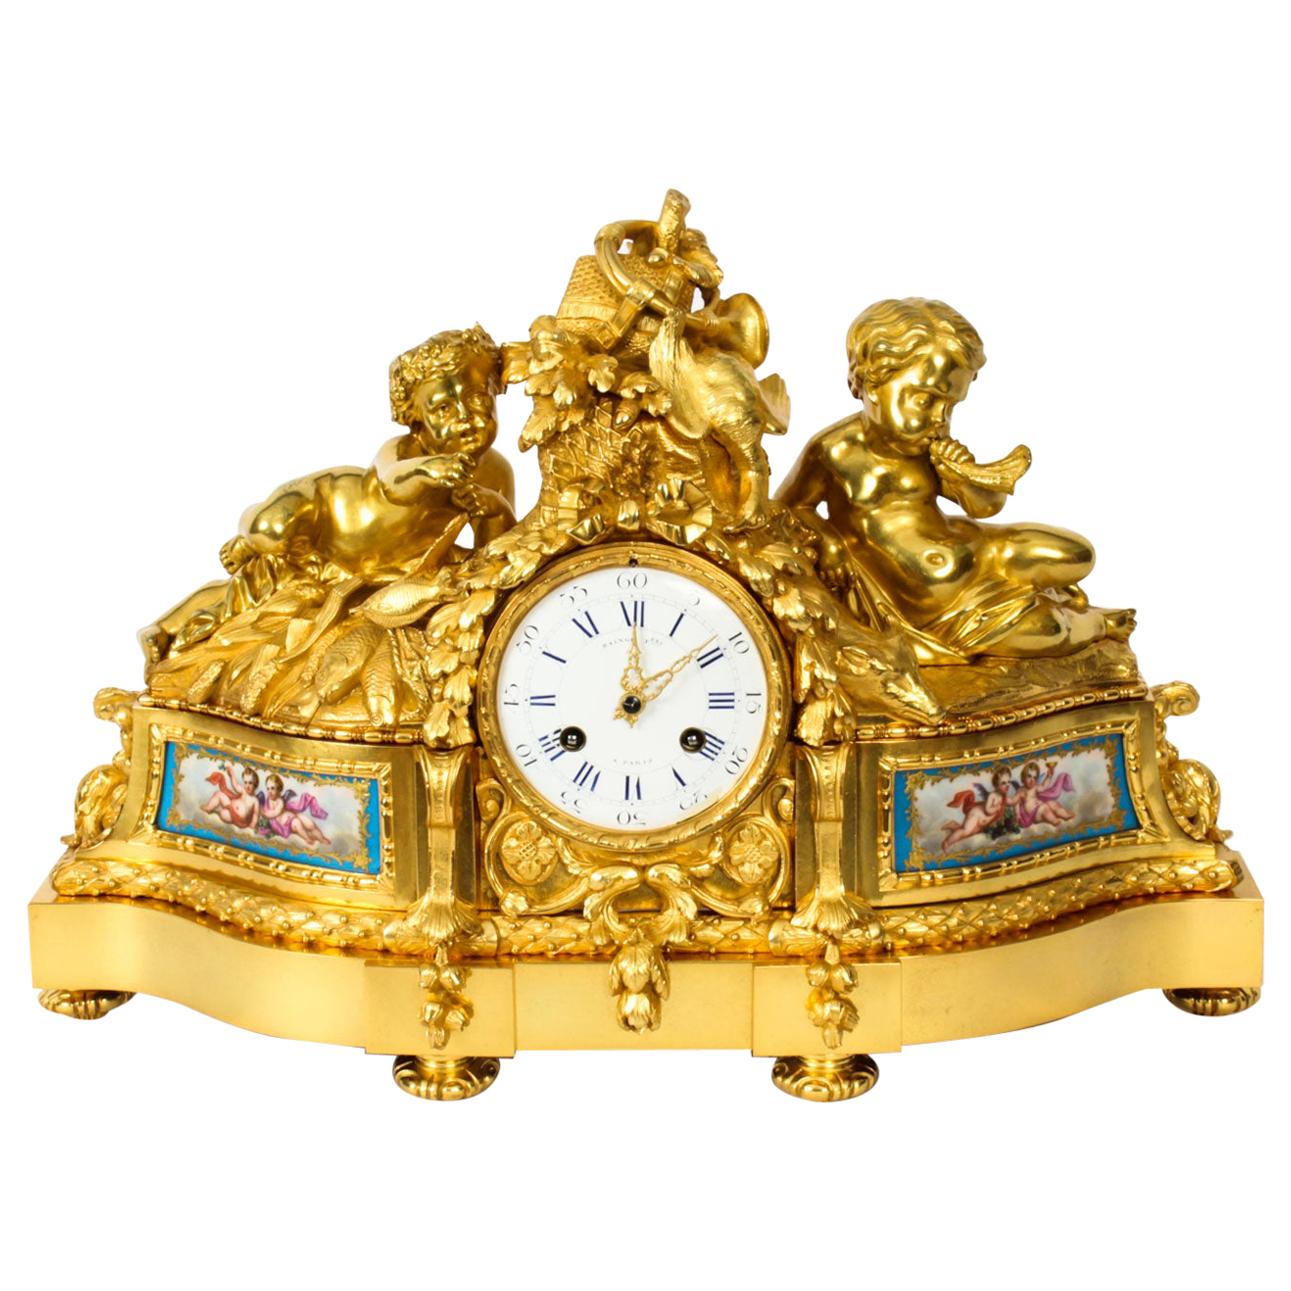 Antique French Sevres Porcelain Ormolu Clock by Raingo Freres, 19th Century